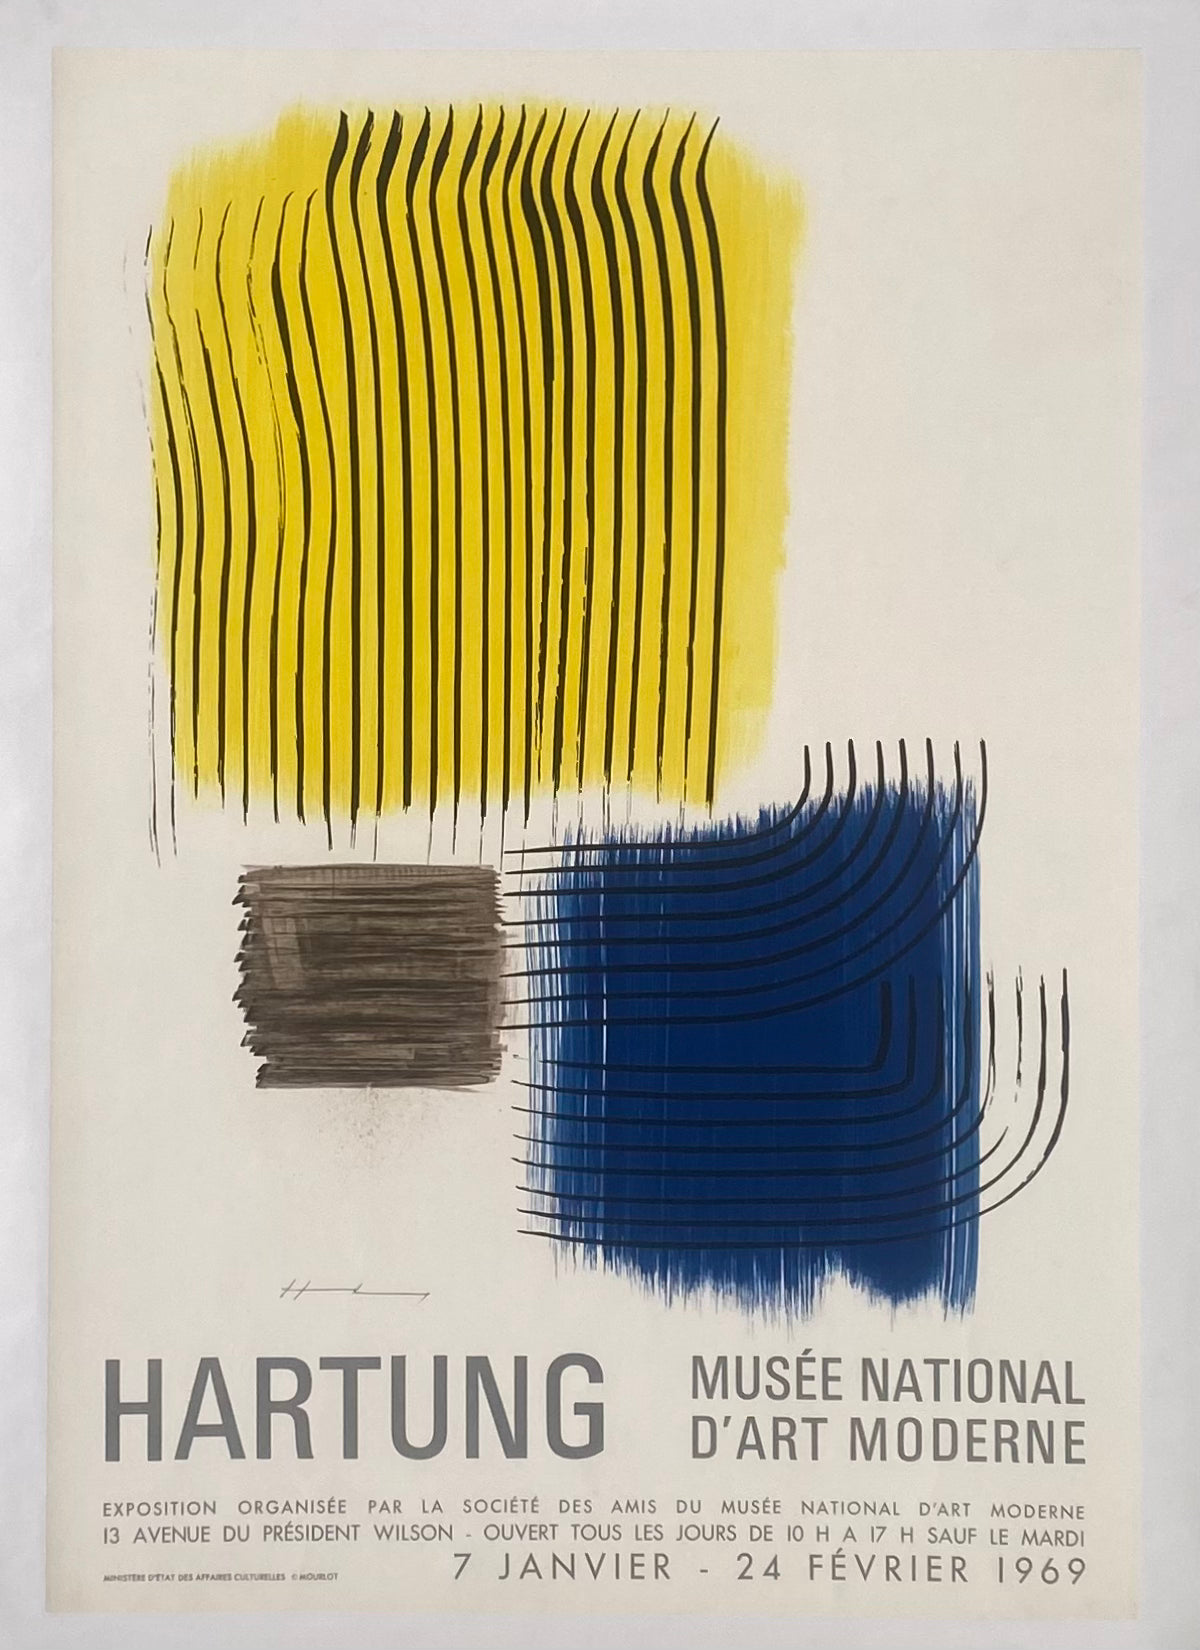 Affiche Musée National d'art moderne par Hartung, 1969